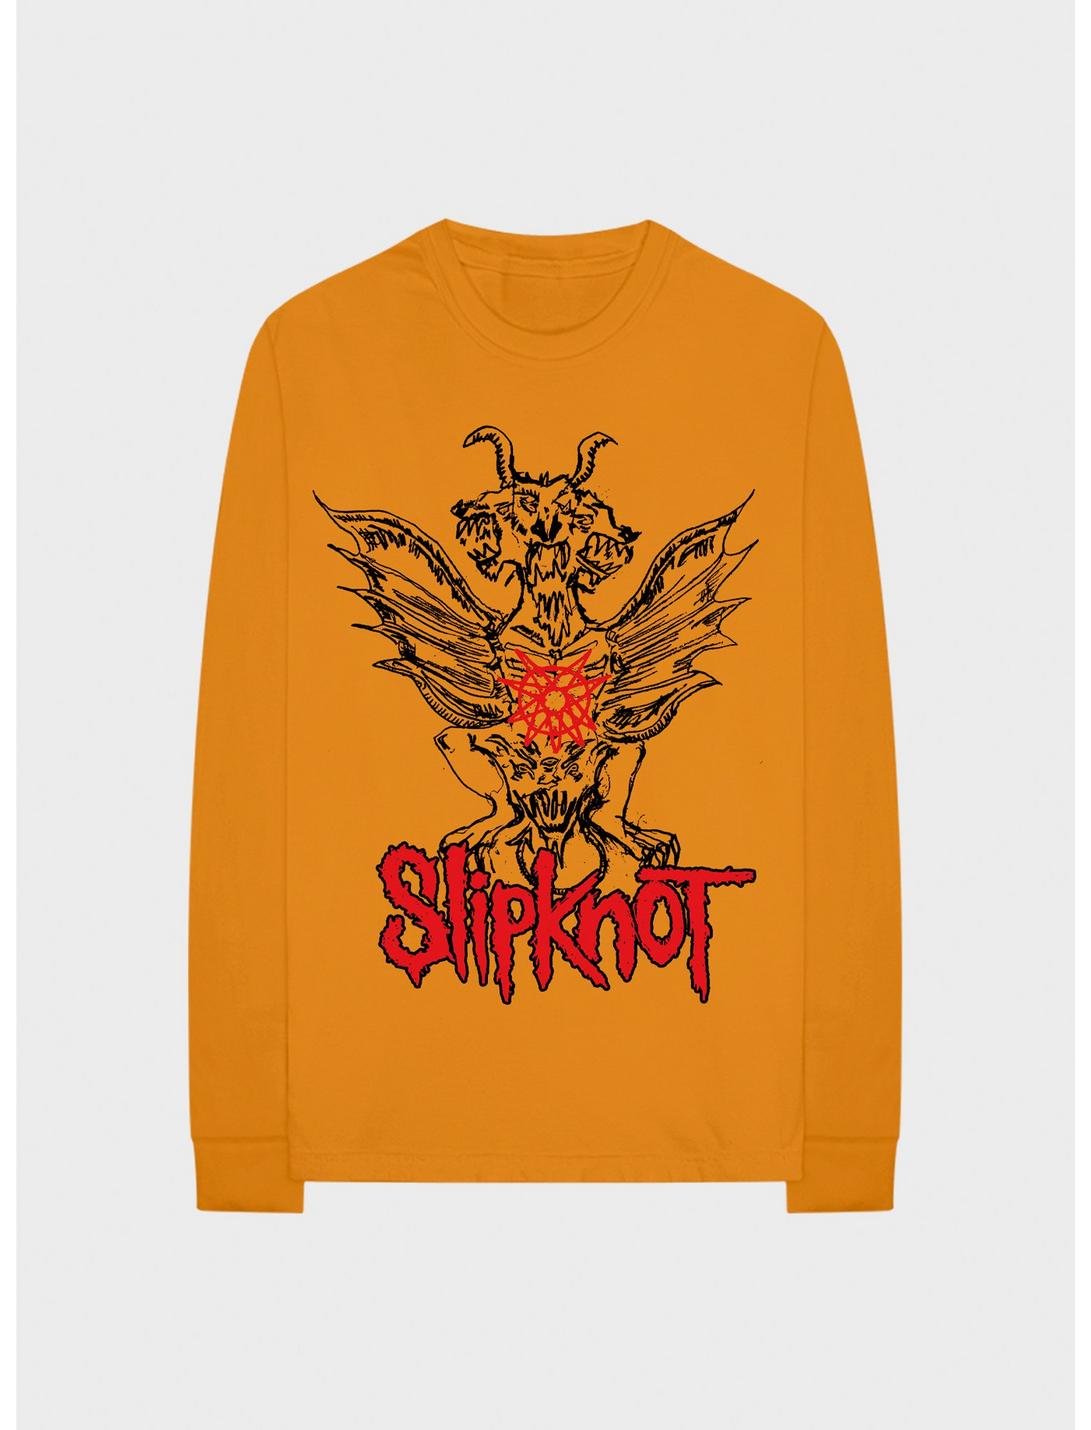 Slipknot Winged Devil Long-Sleeve T-Shirt, ORANGE, hi-res